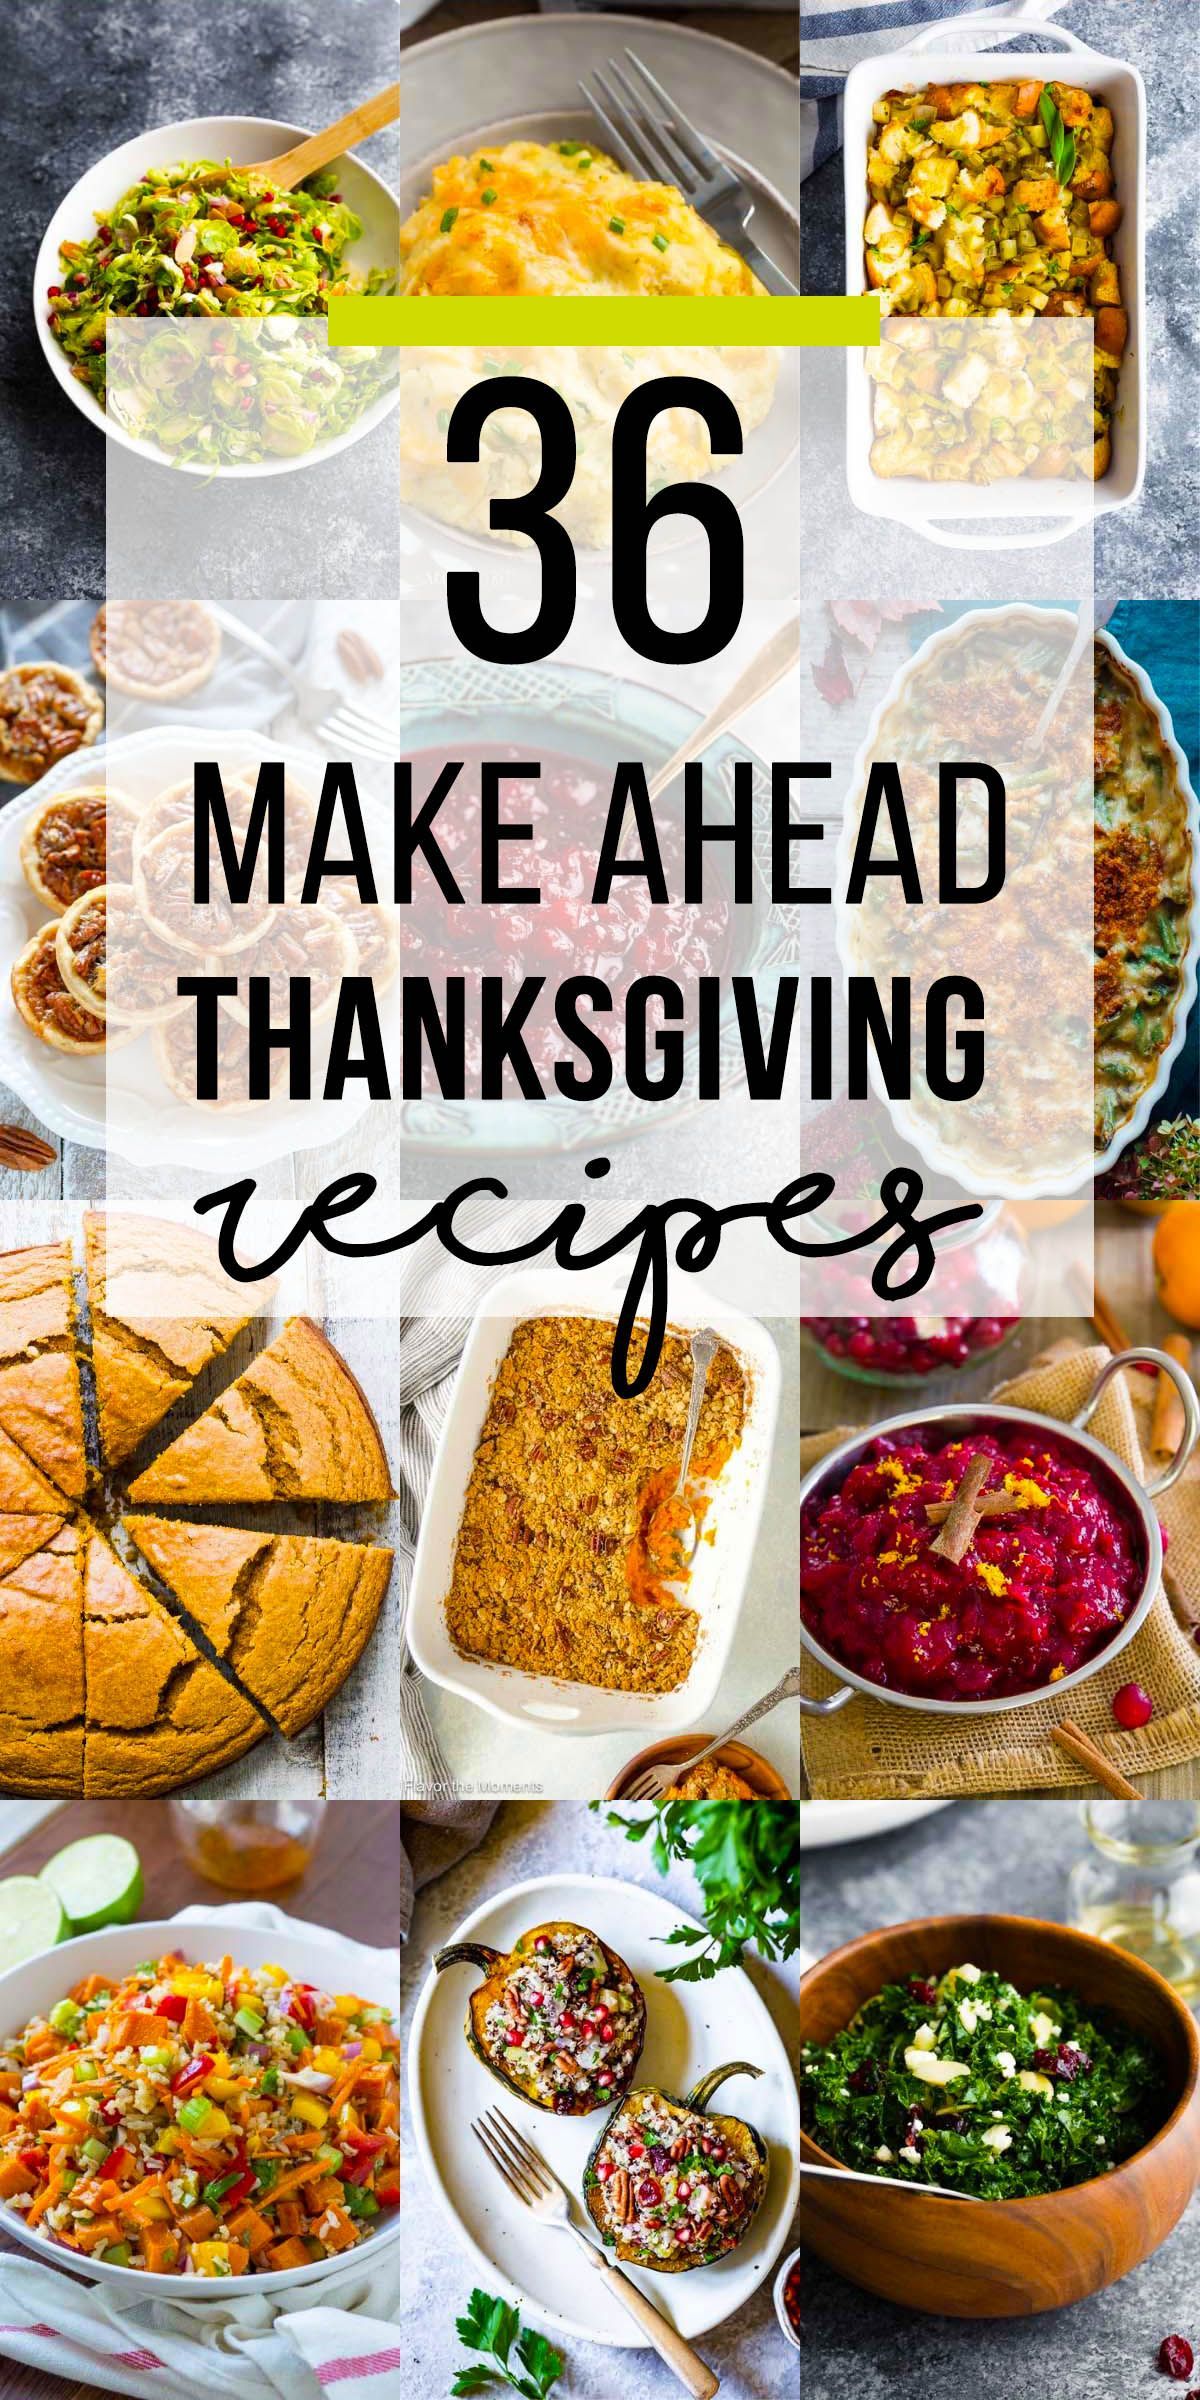 Make Ahead Thanksgiving Recipes -   Popular